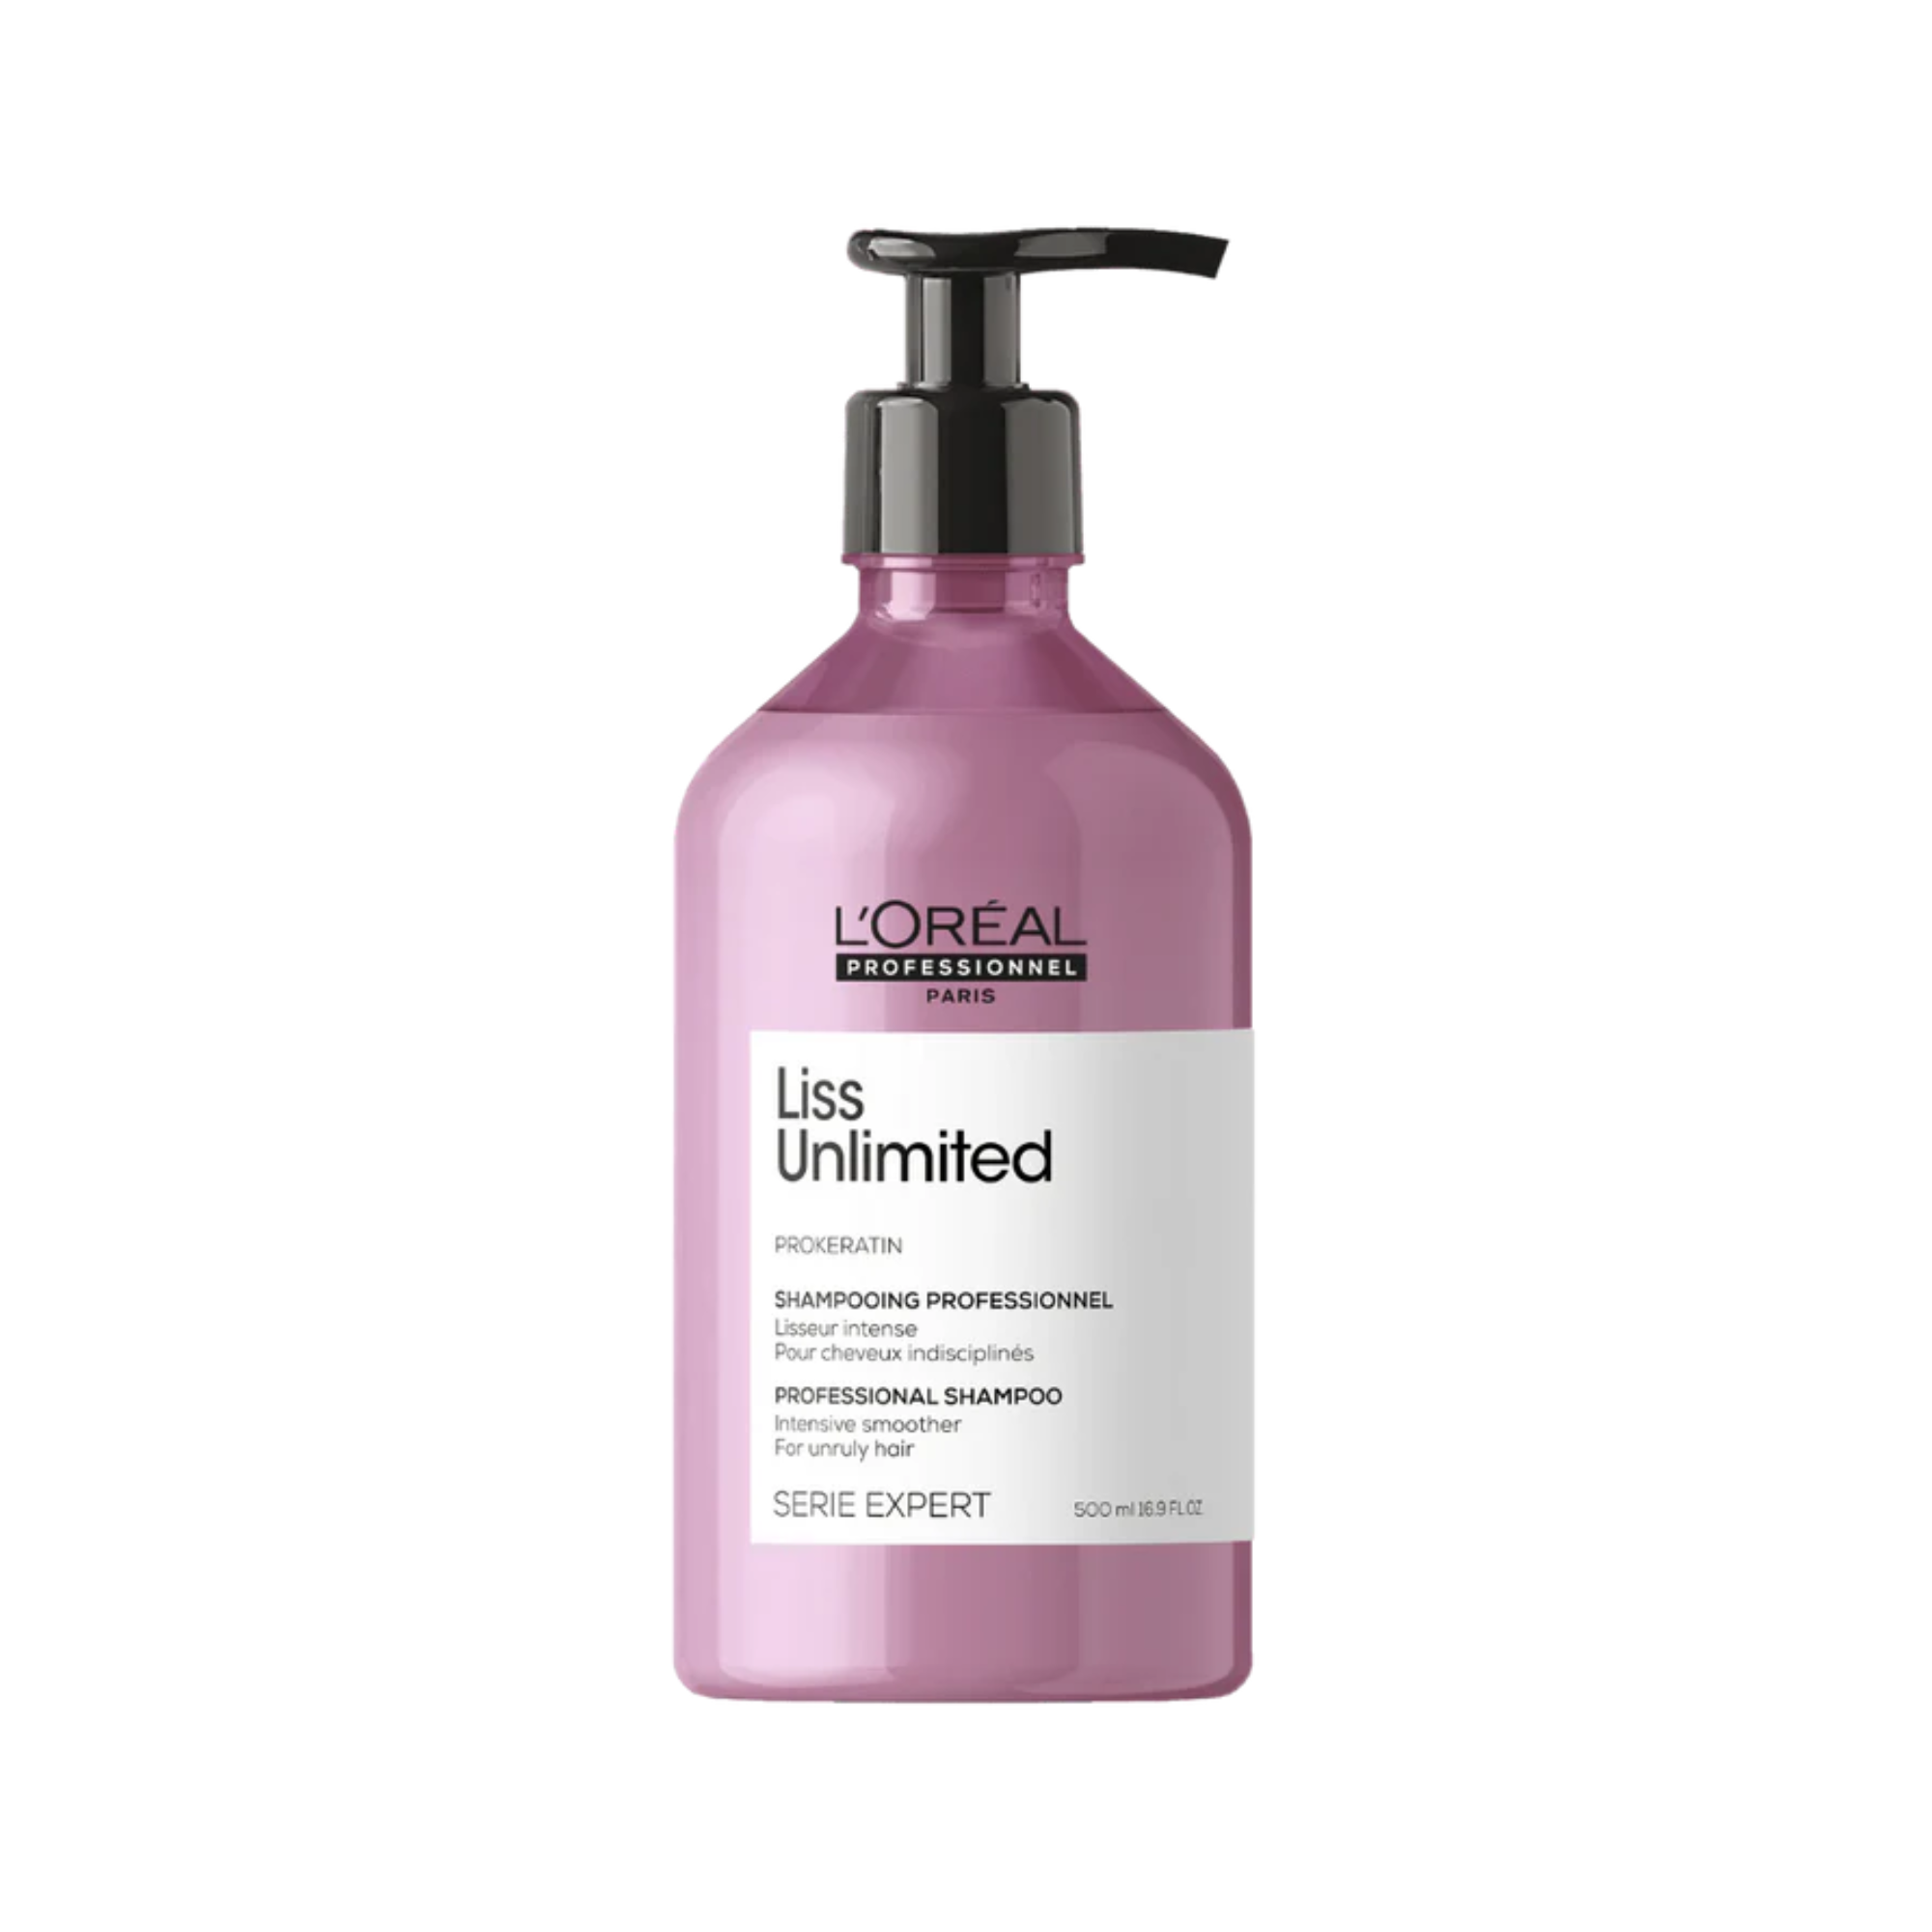 Shampoo L'Oreal Liss Unlimited Prokeratin (500 ML)